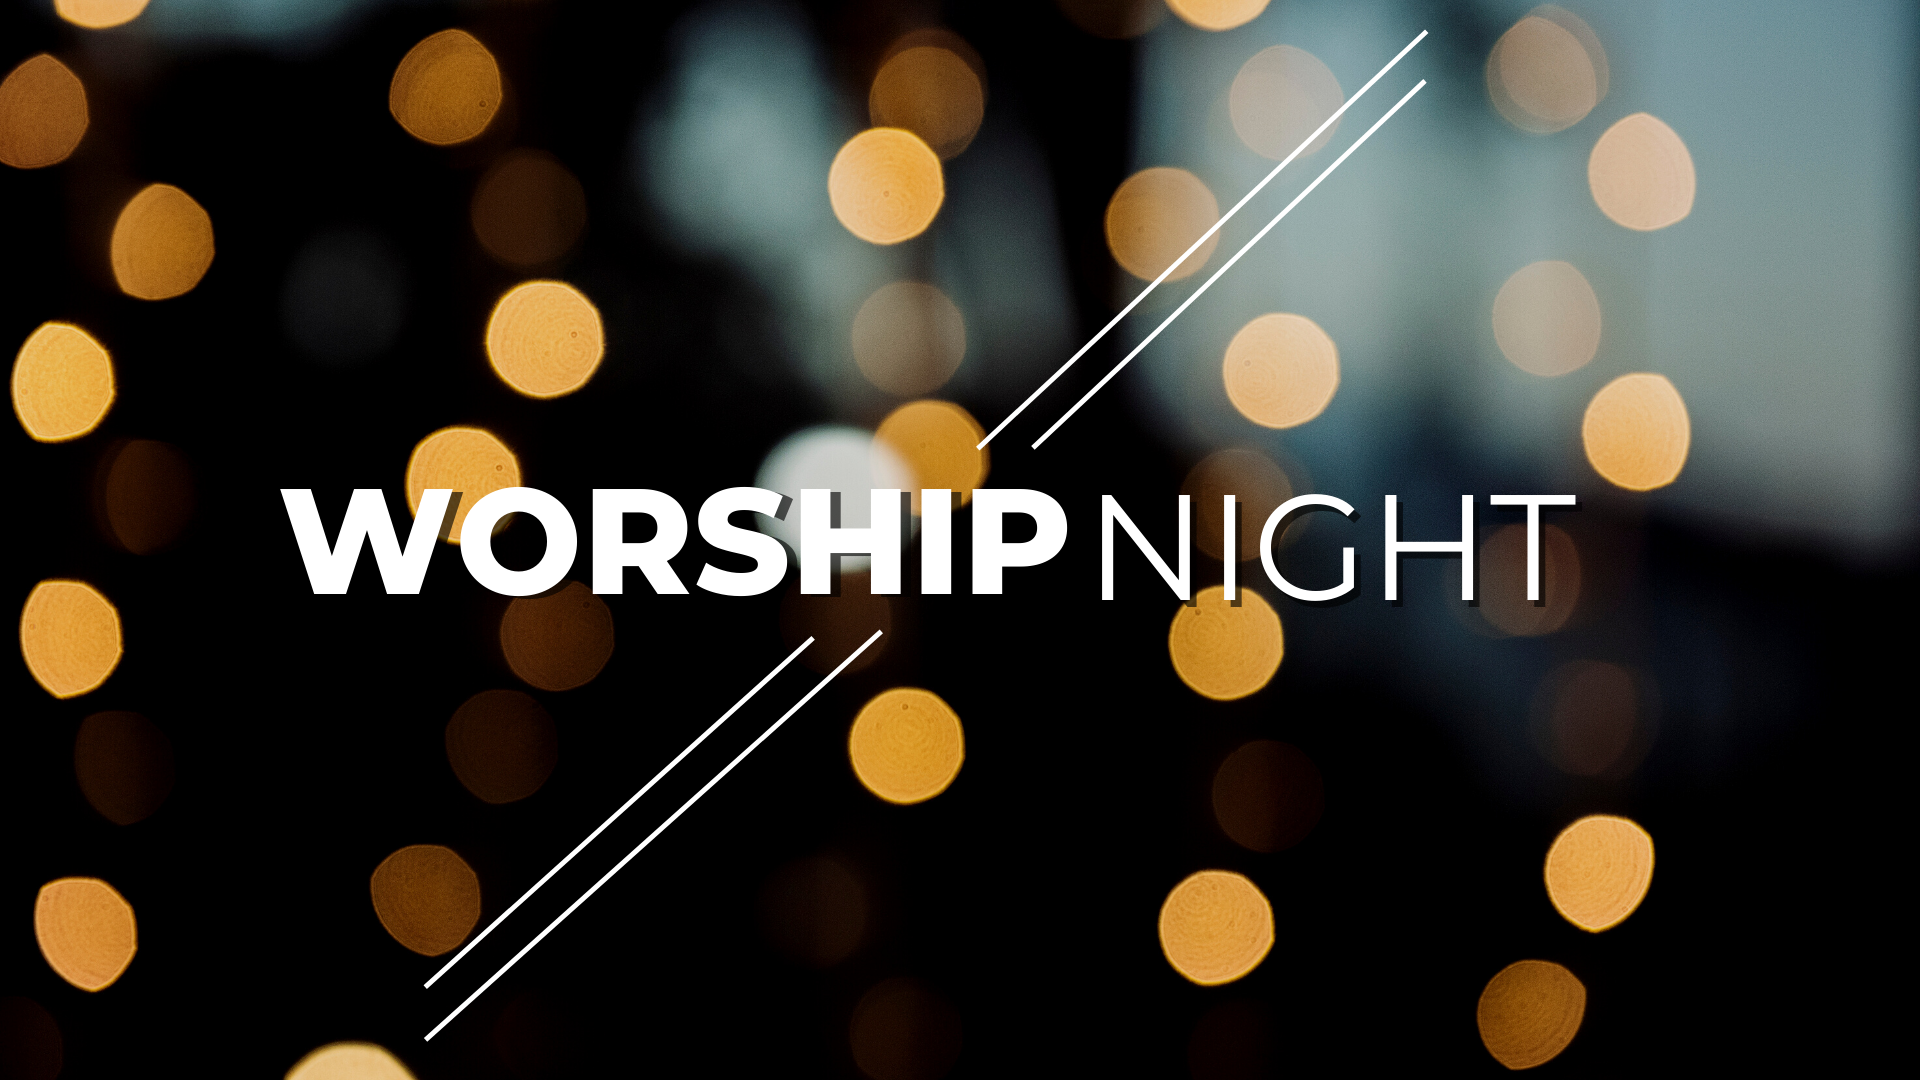 Worship Night 10-22 event image image